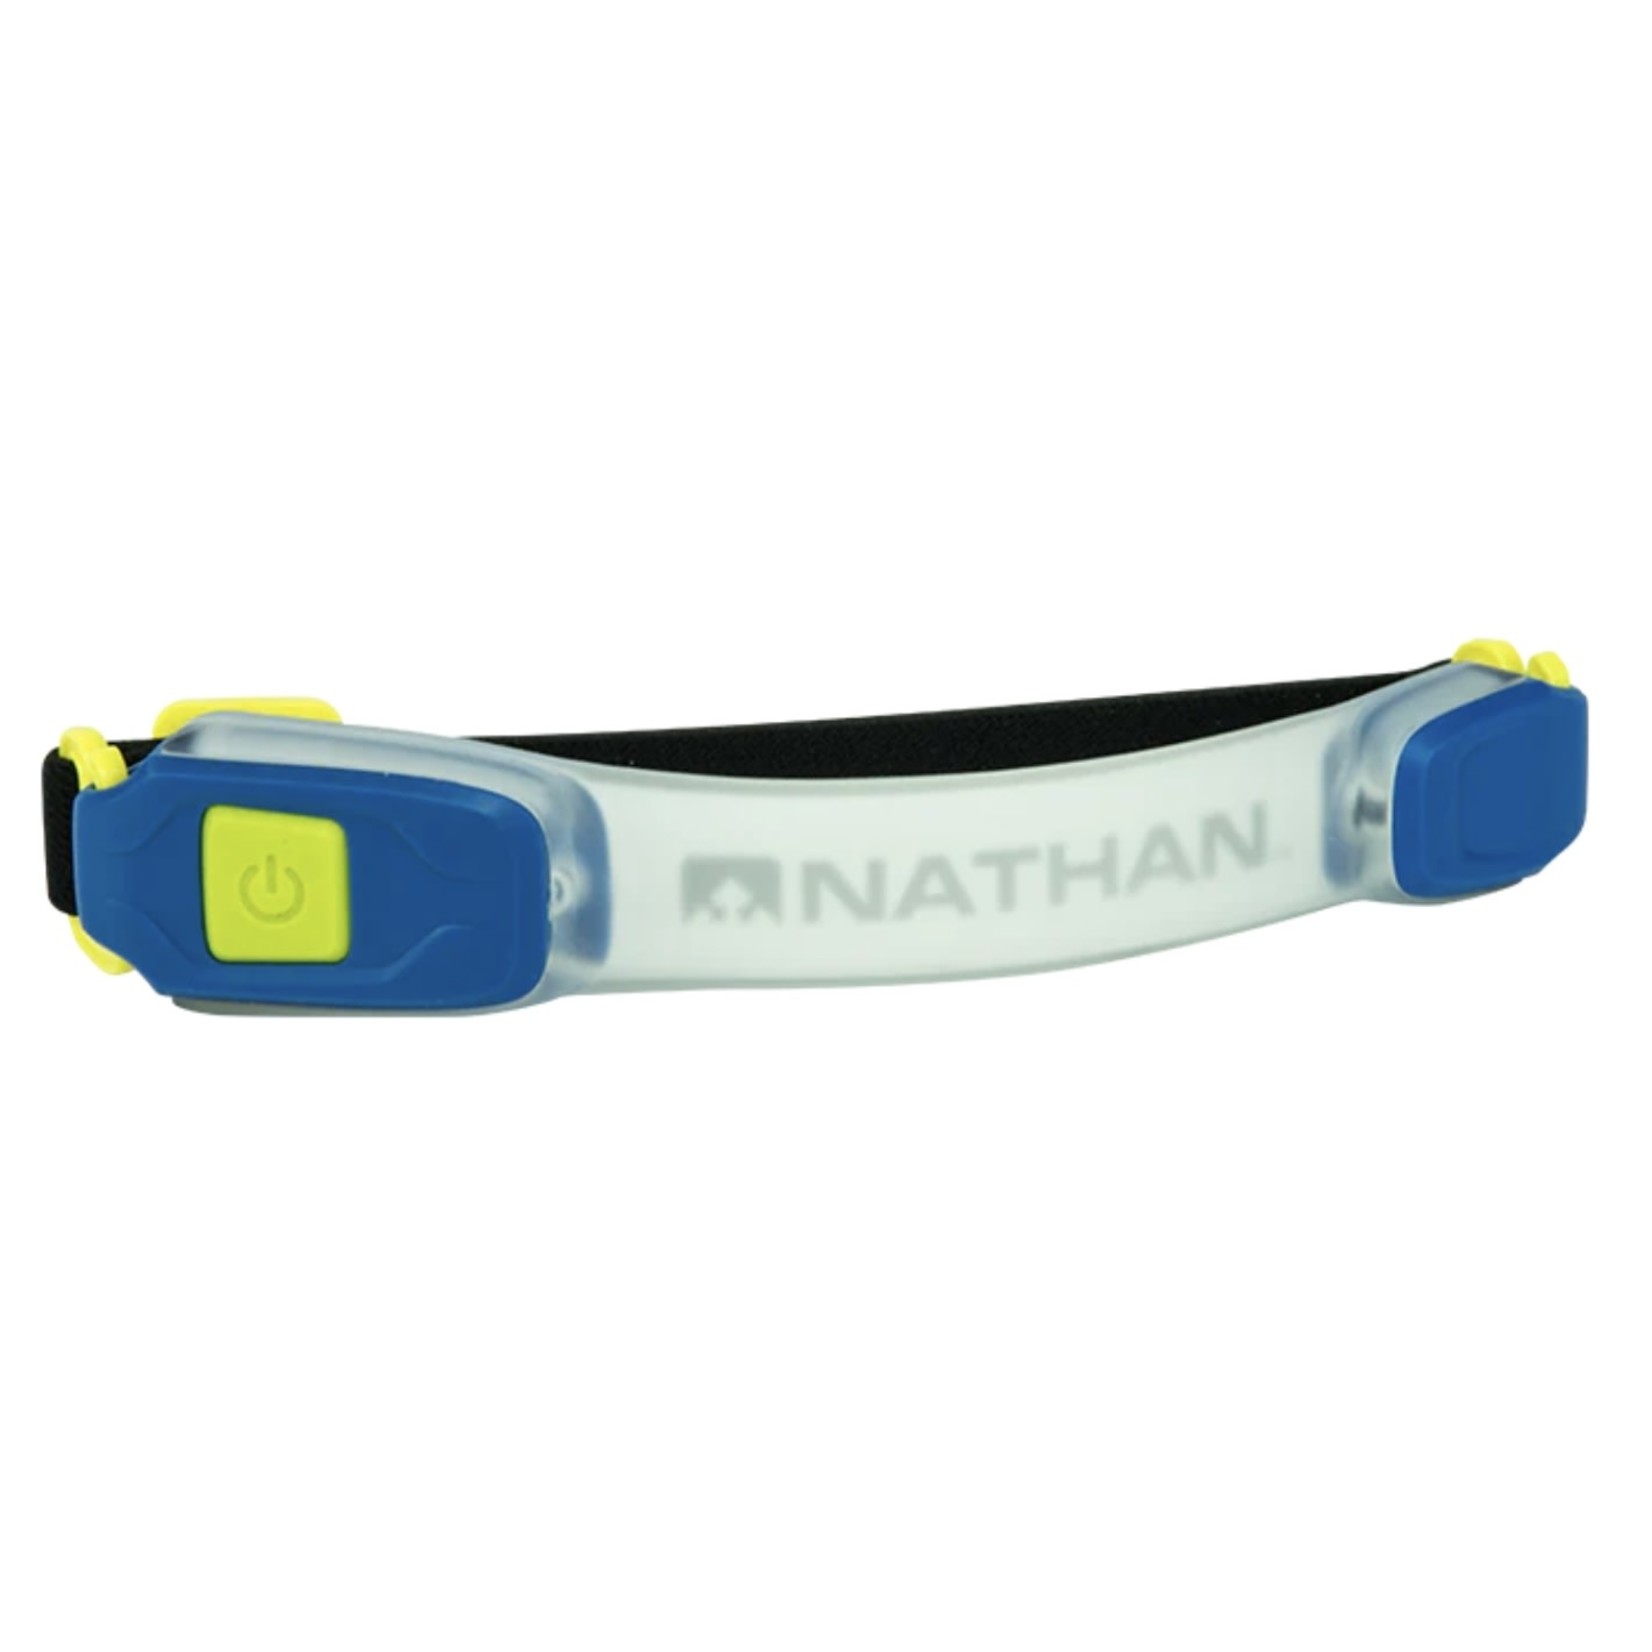 Nathan Nathan LightBender RX Armband